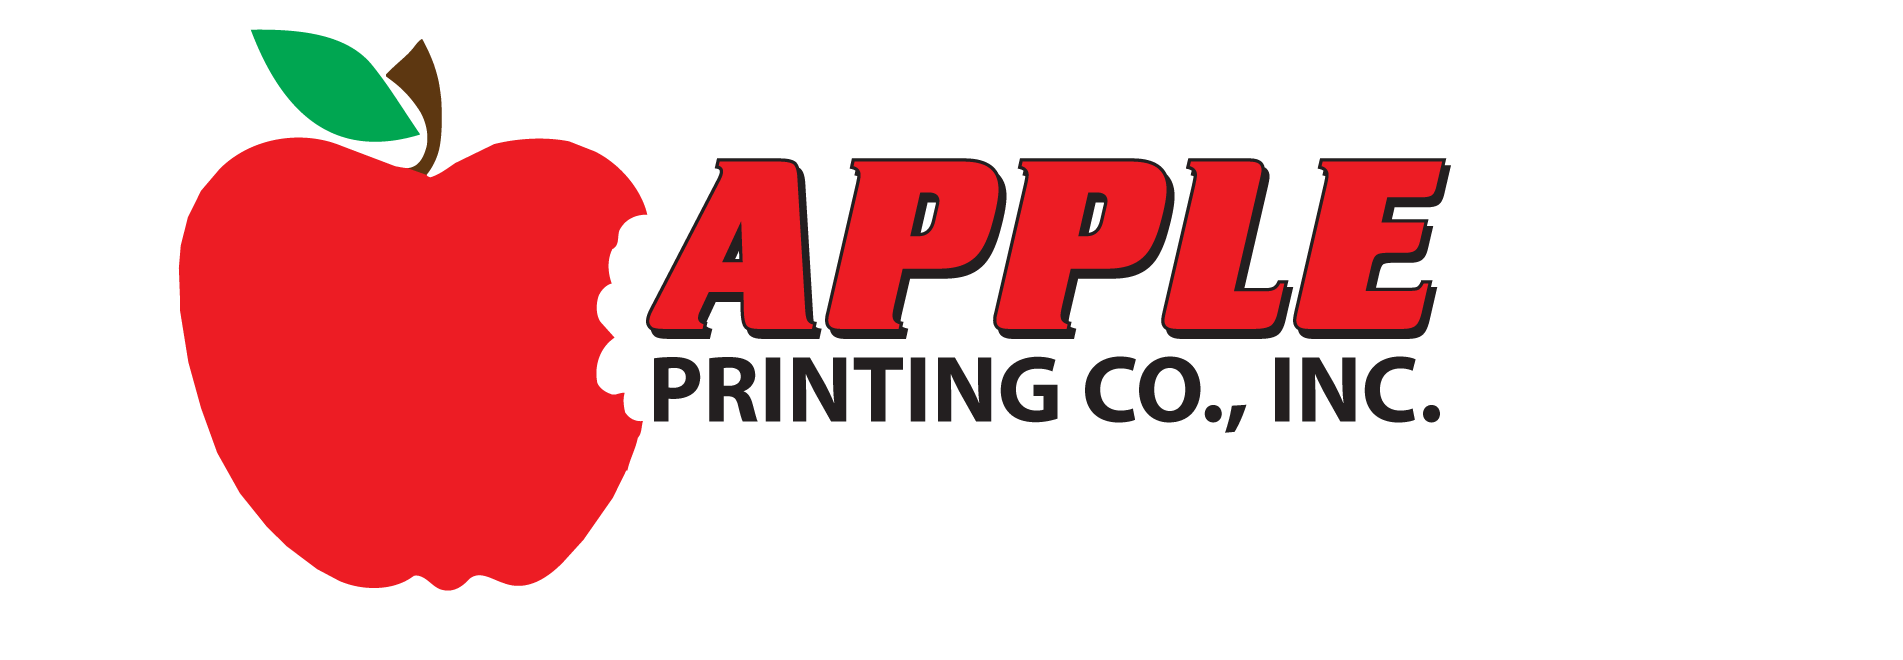 Apple Printing Co.